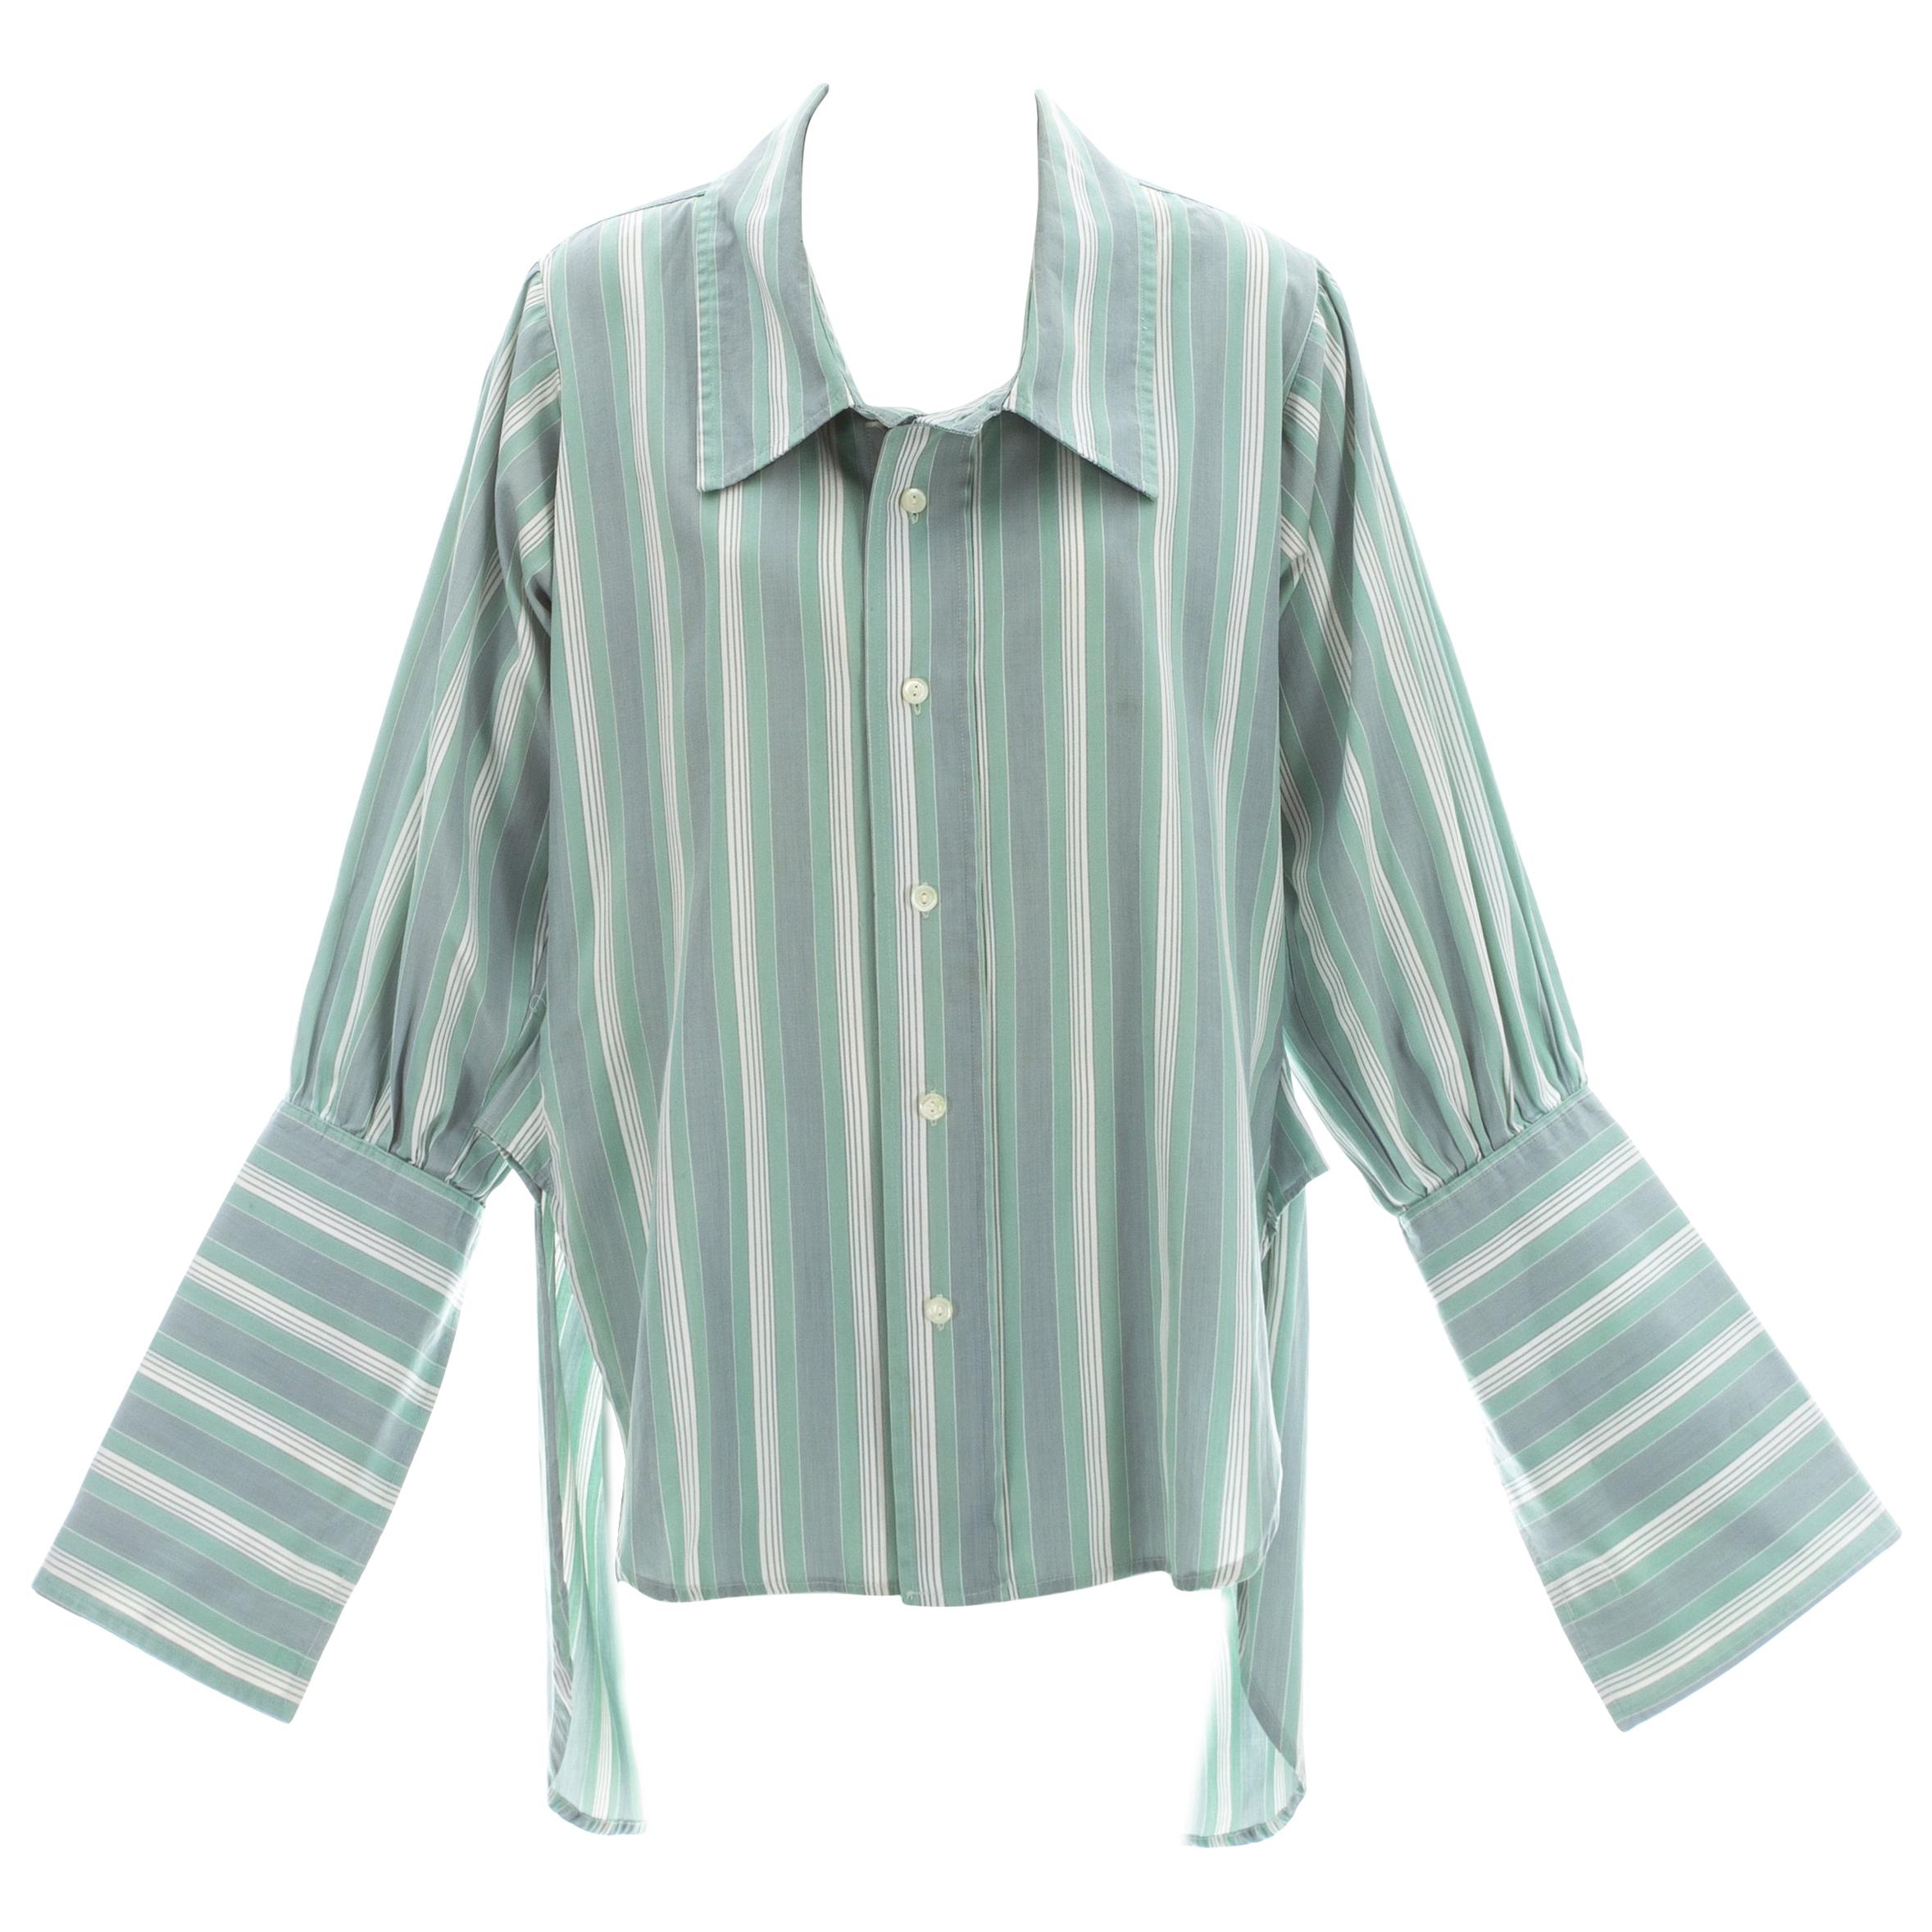 Vivienne Westwood / Malcolm McLaren striped cotton oversized shirt, ss 1983 For Sale